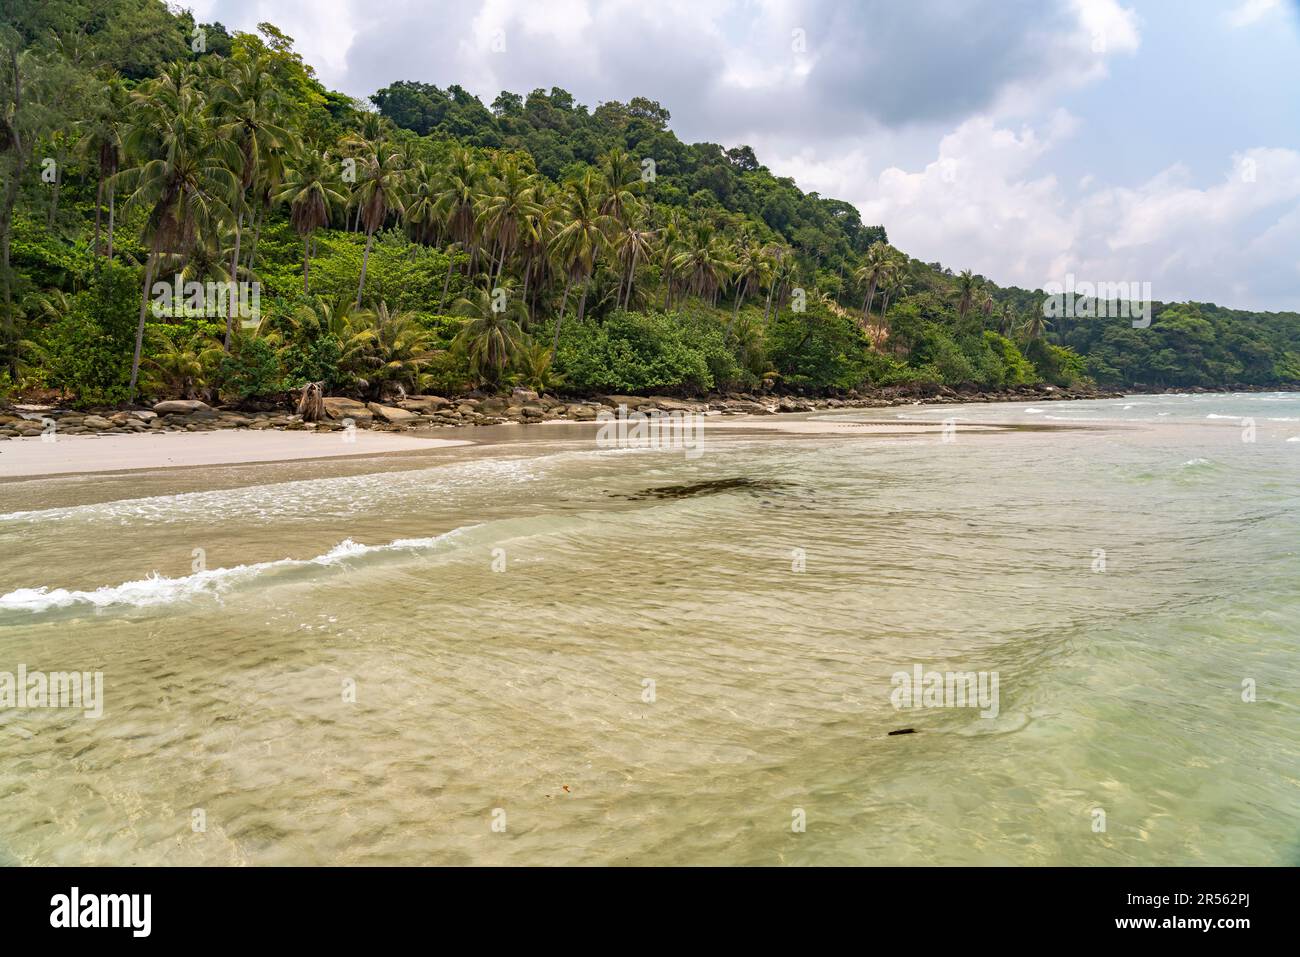 Am Strand Khlong Yai Kee Beach, Insel Ko Kut oder Koh Kood im Golf von Thailand, Asien | Khlong Yai Kee Beach, Ko Kut oder Koh Kood, Insel in Gu Stockfoto